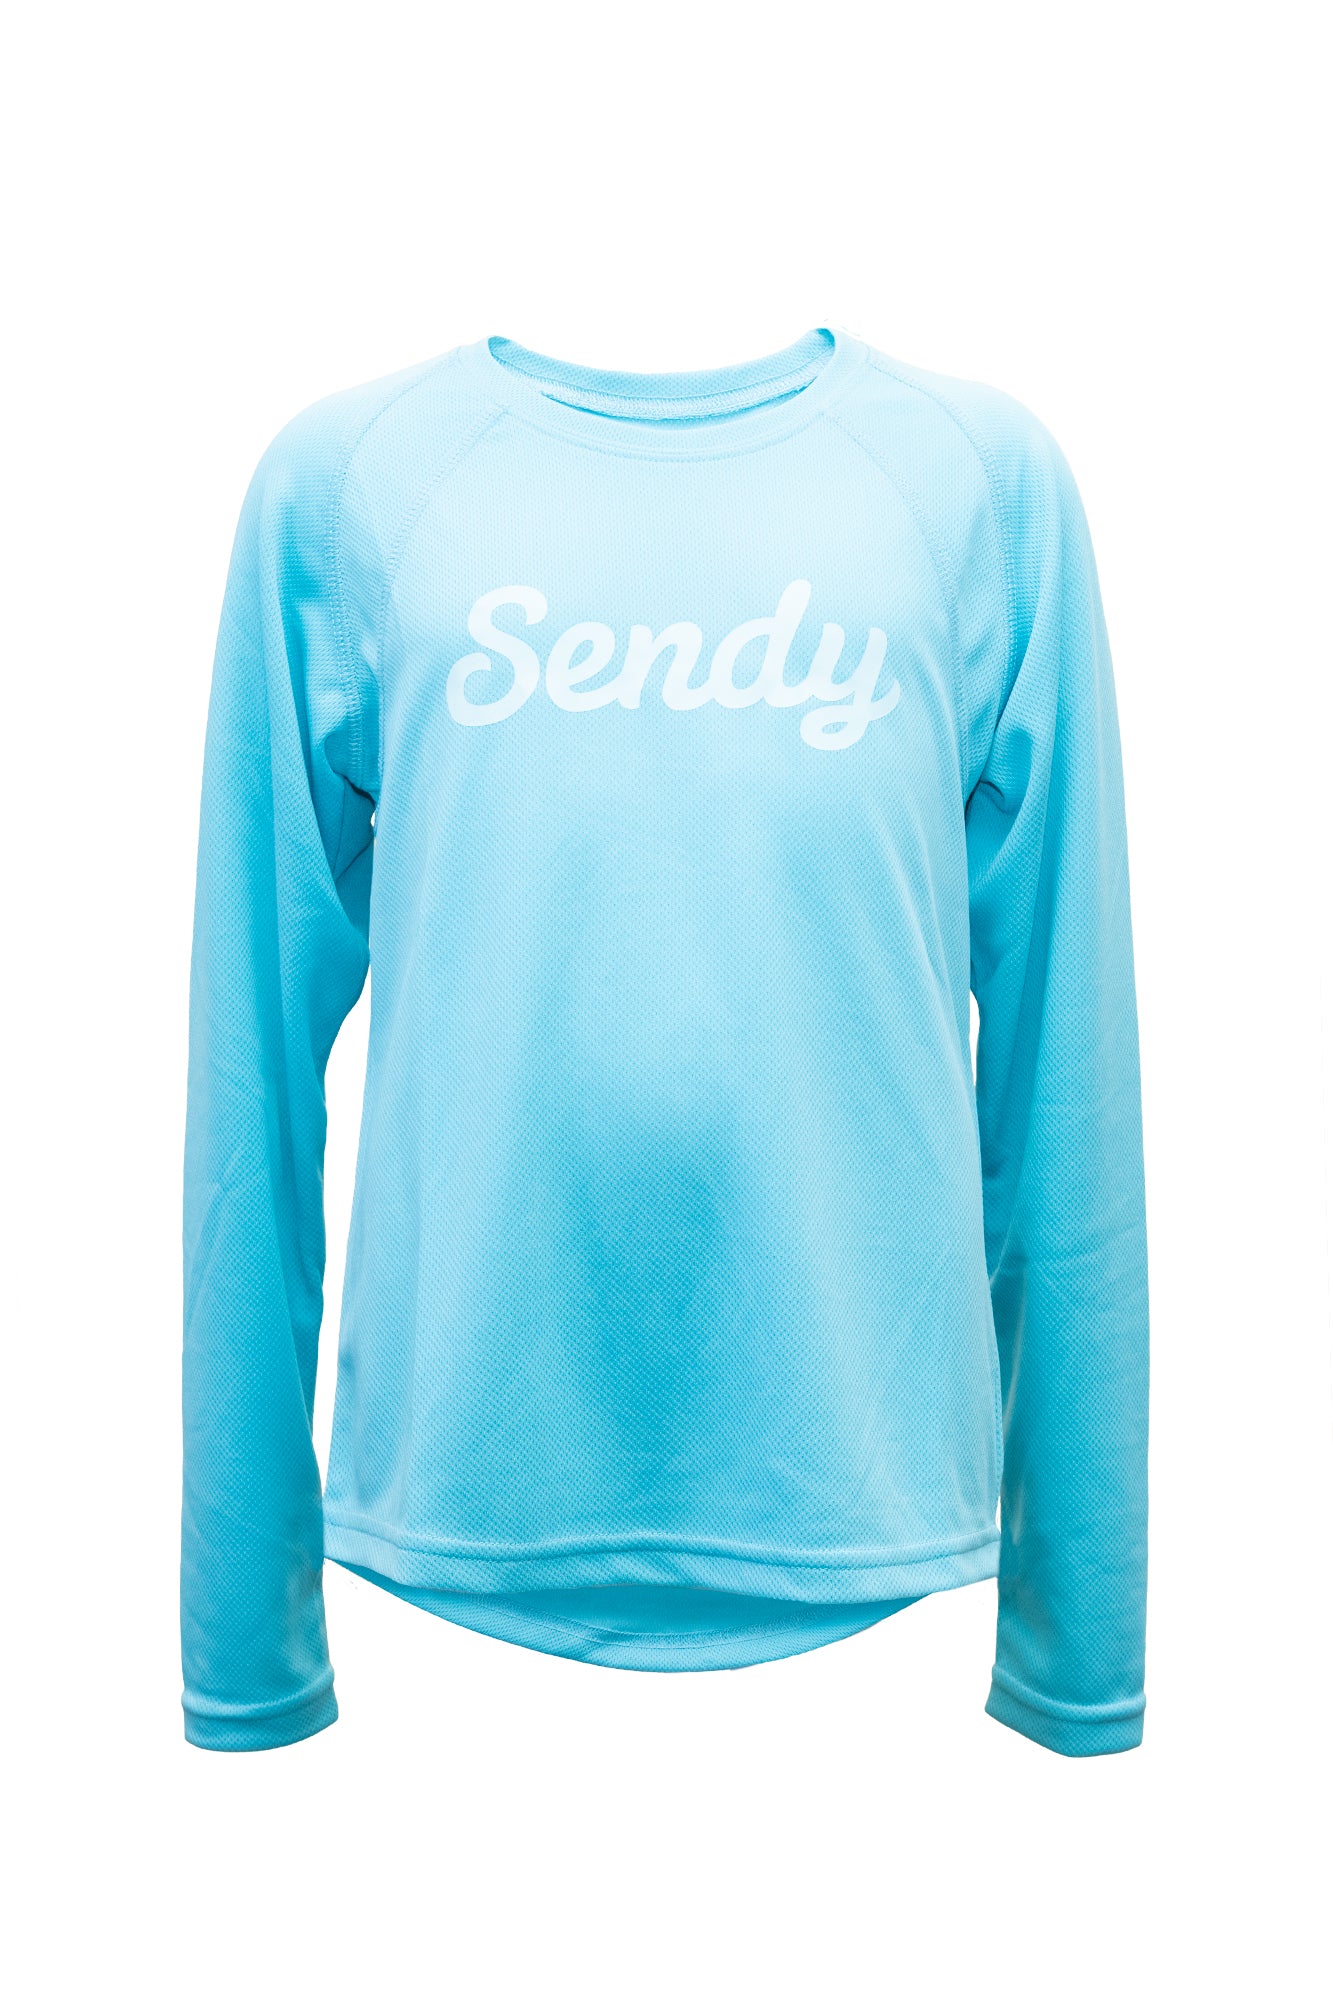 Send It Kids Long Sleeved MTB Jersey | The Gem